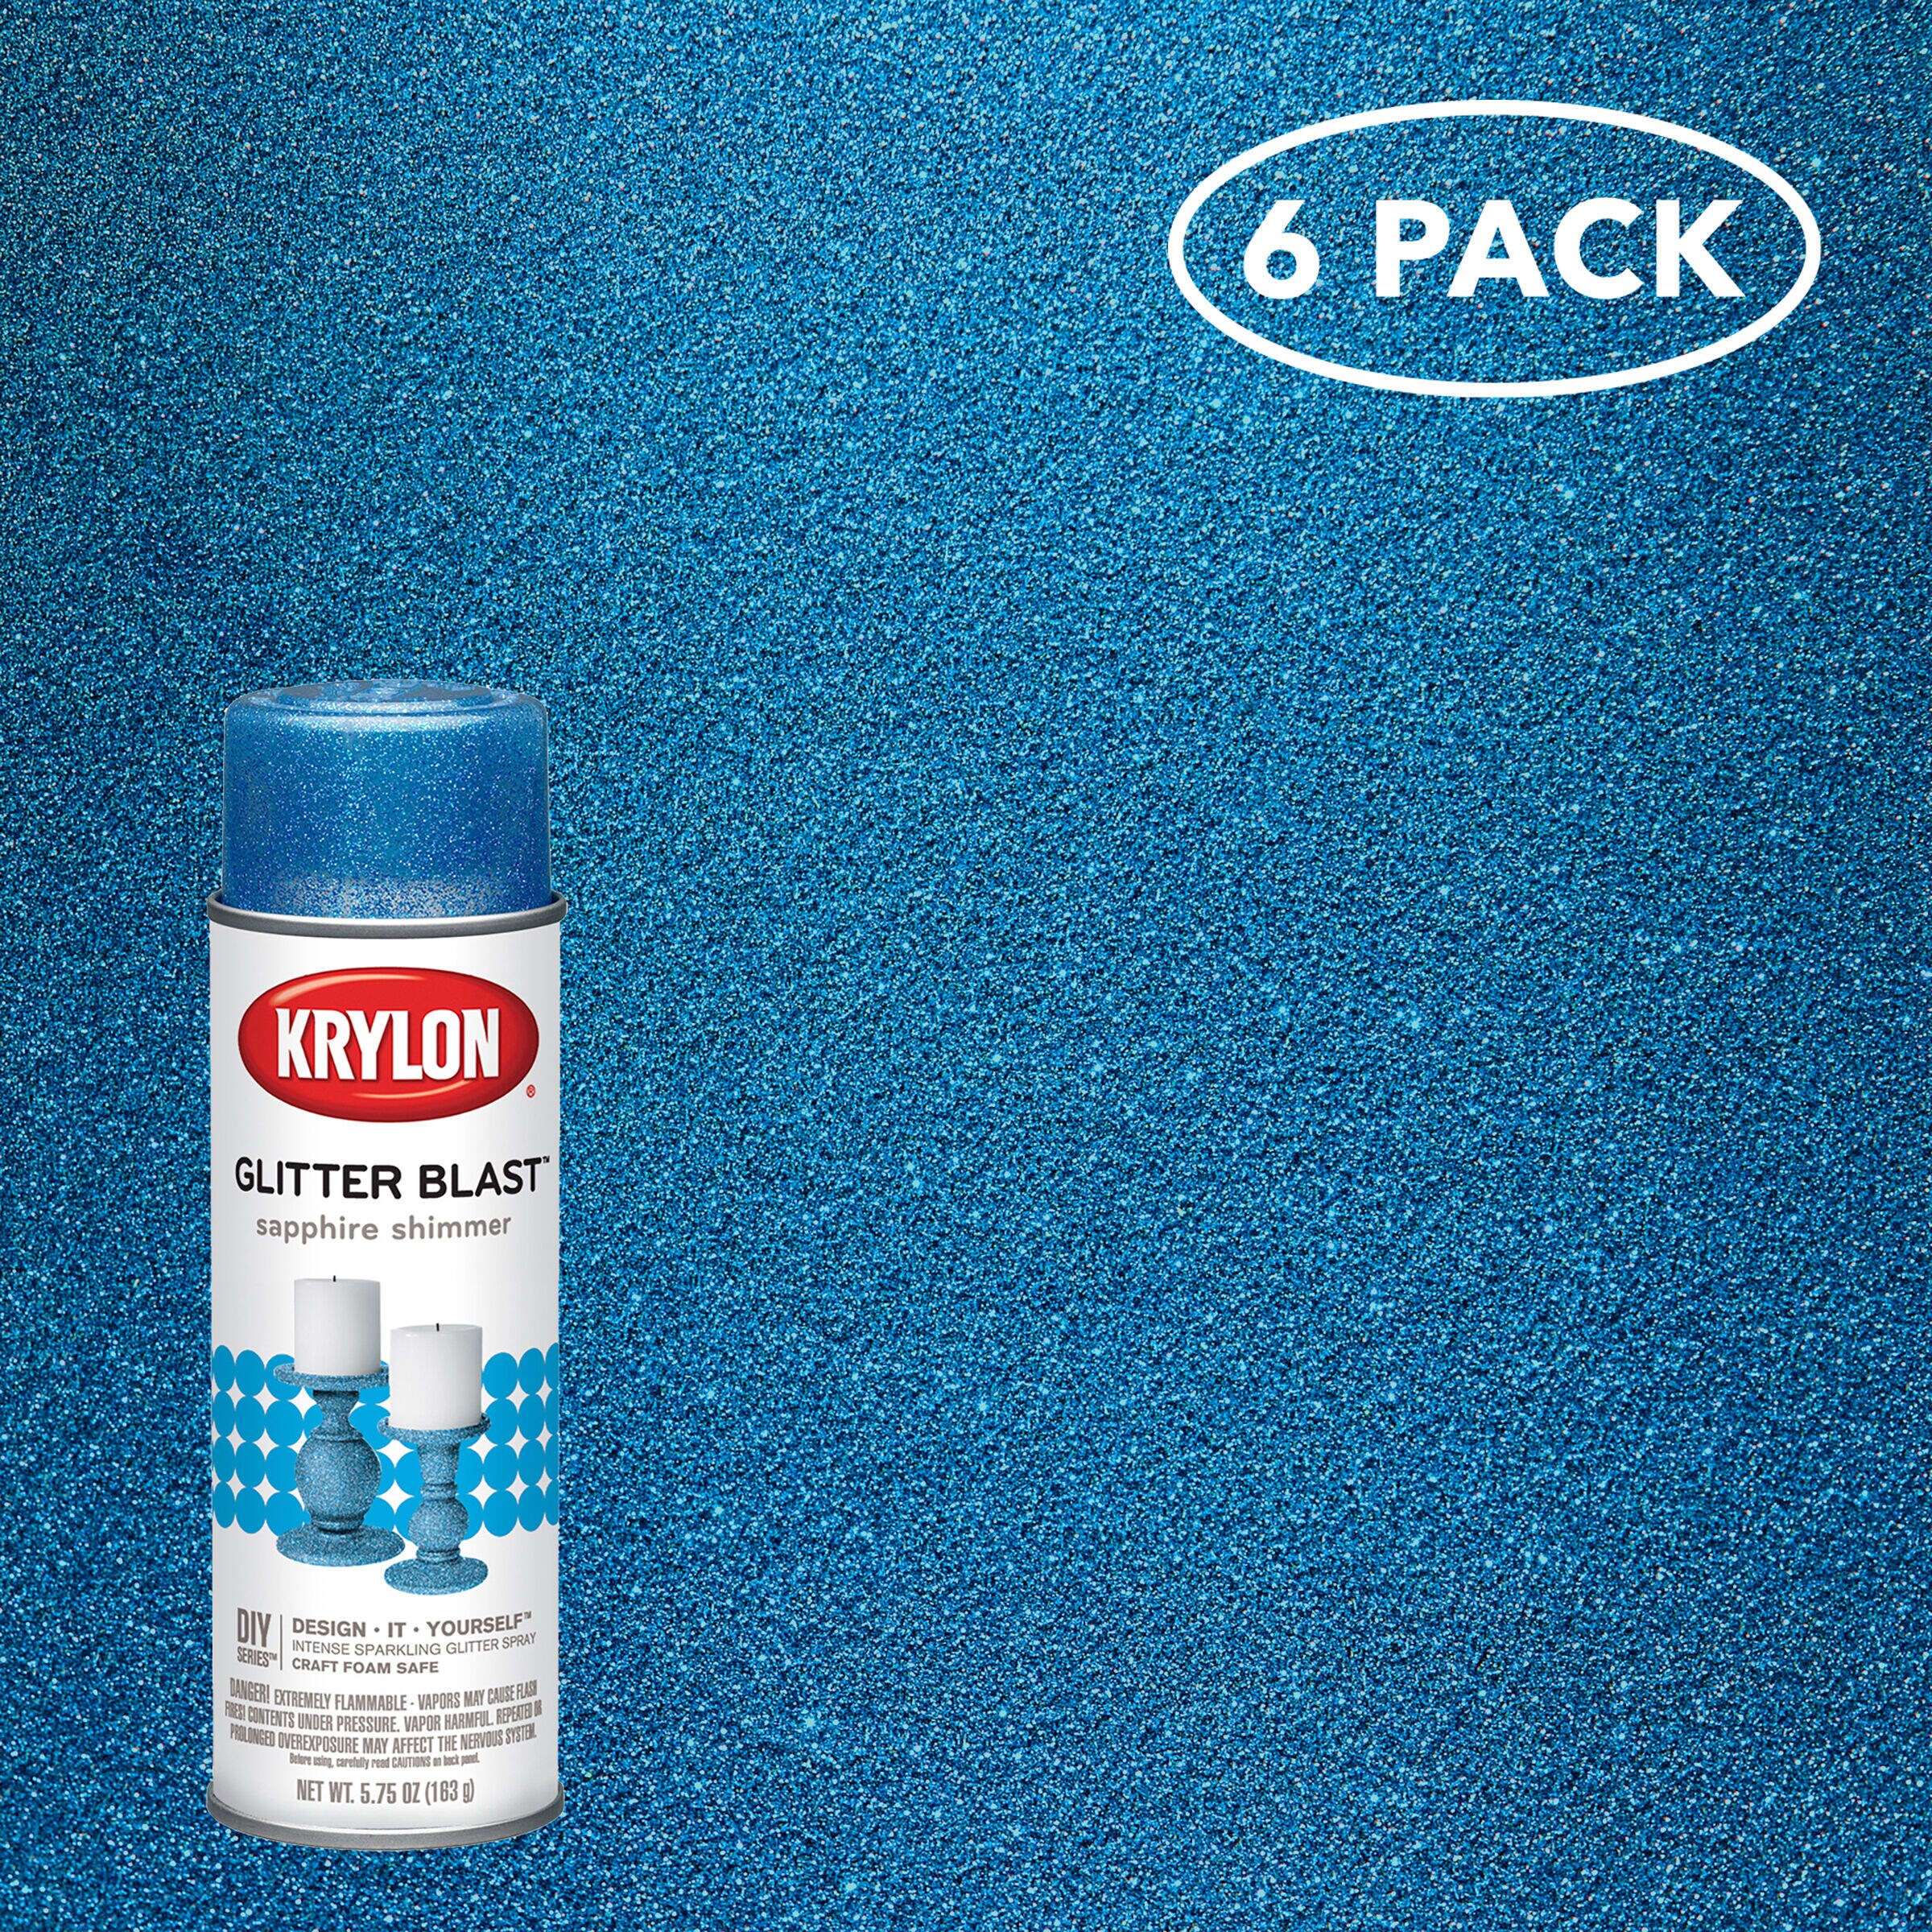 Krylon Glitter Blast Glitter Spray Paint For Craft Projects, Lucky Green  Small Can, 5.75 oz